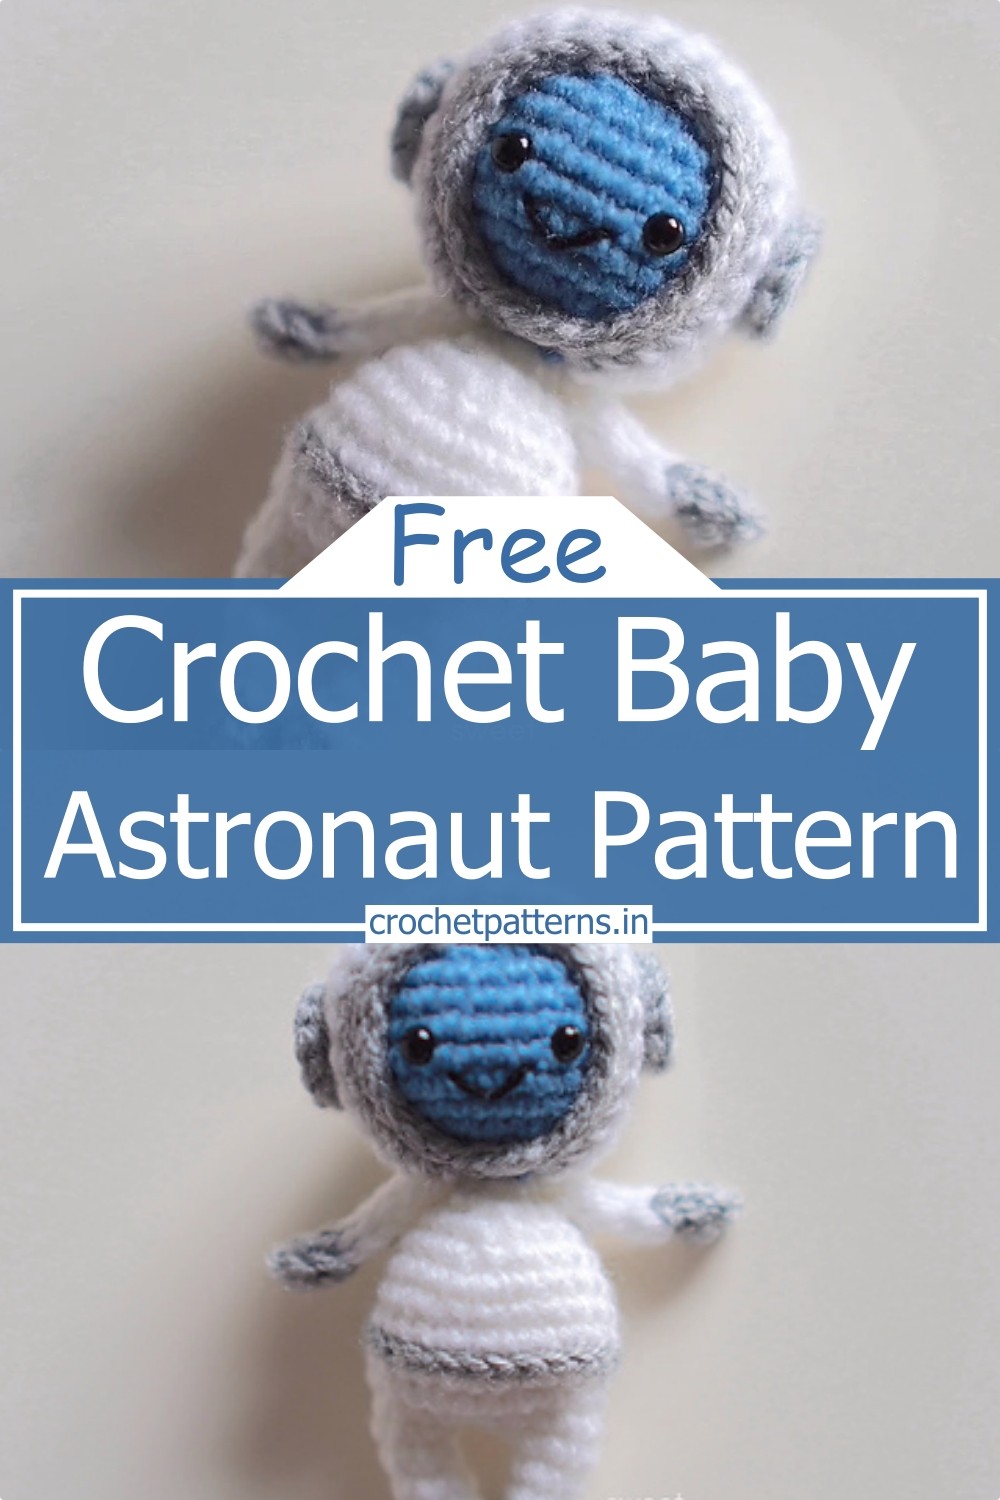 Crochet Baby Astronaut Pattern